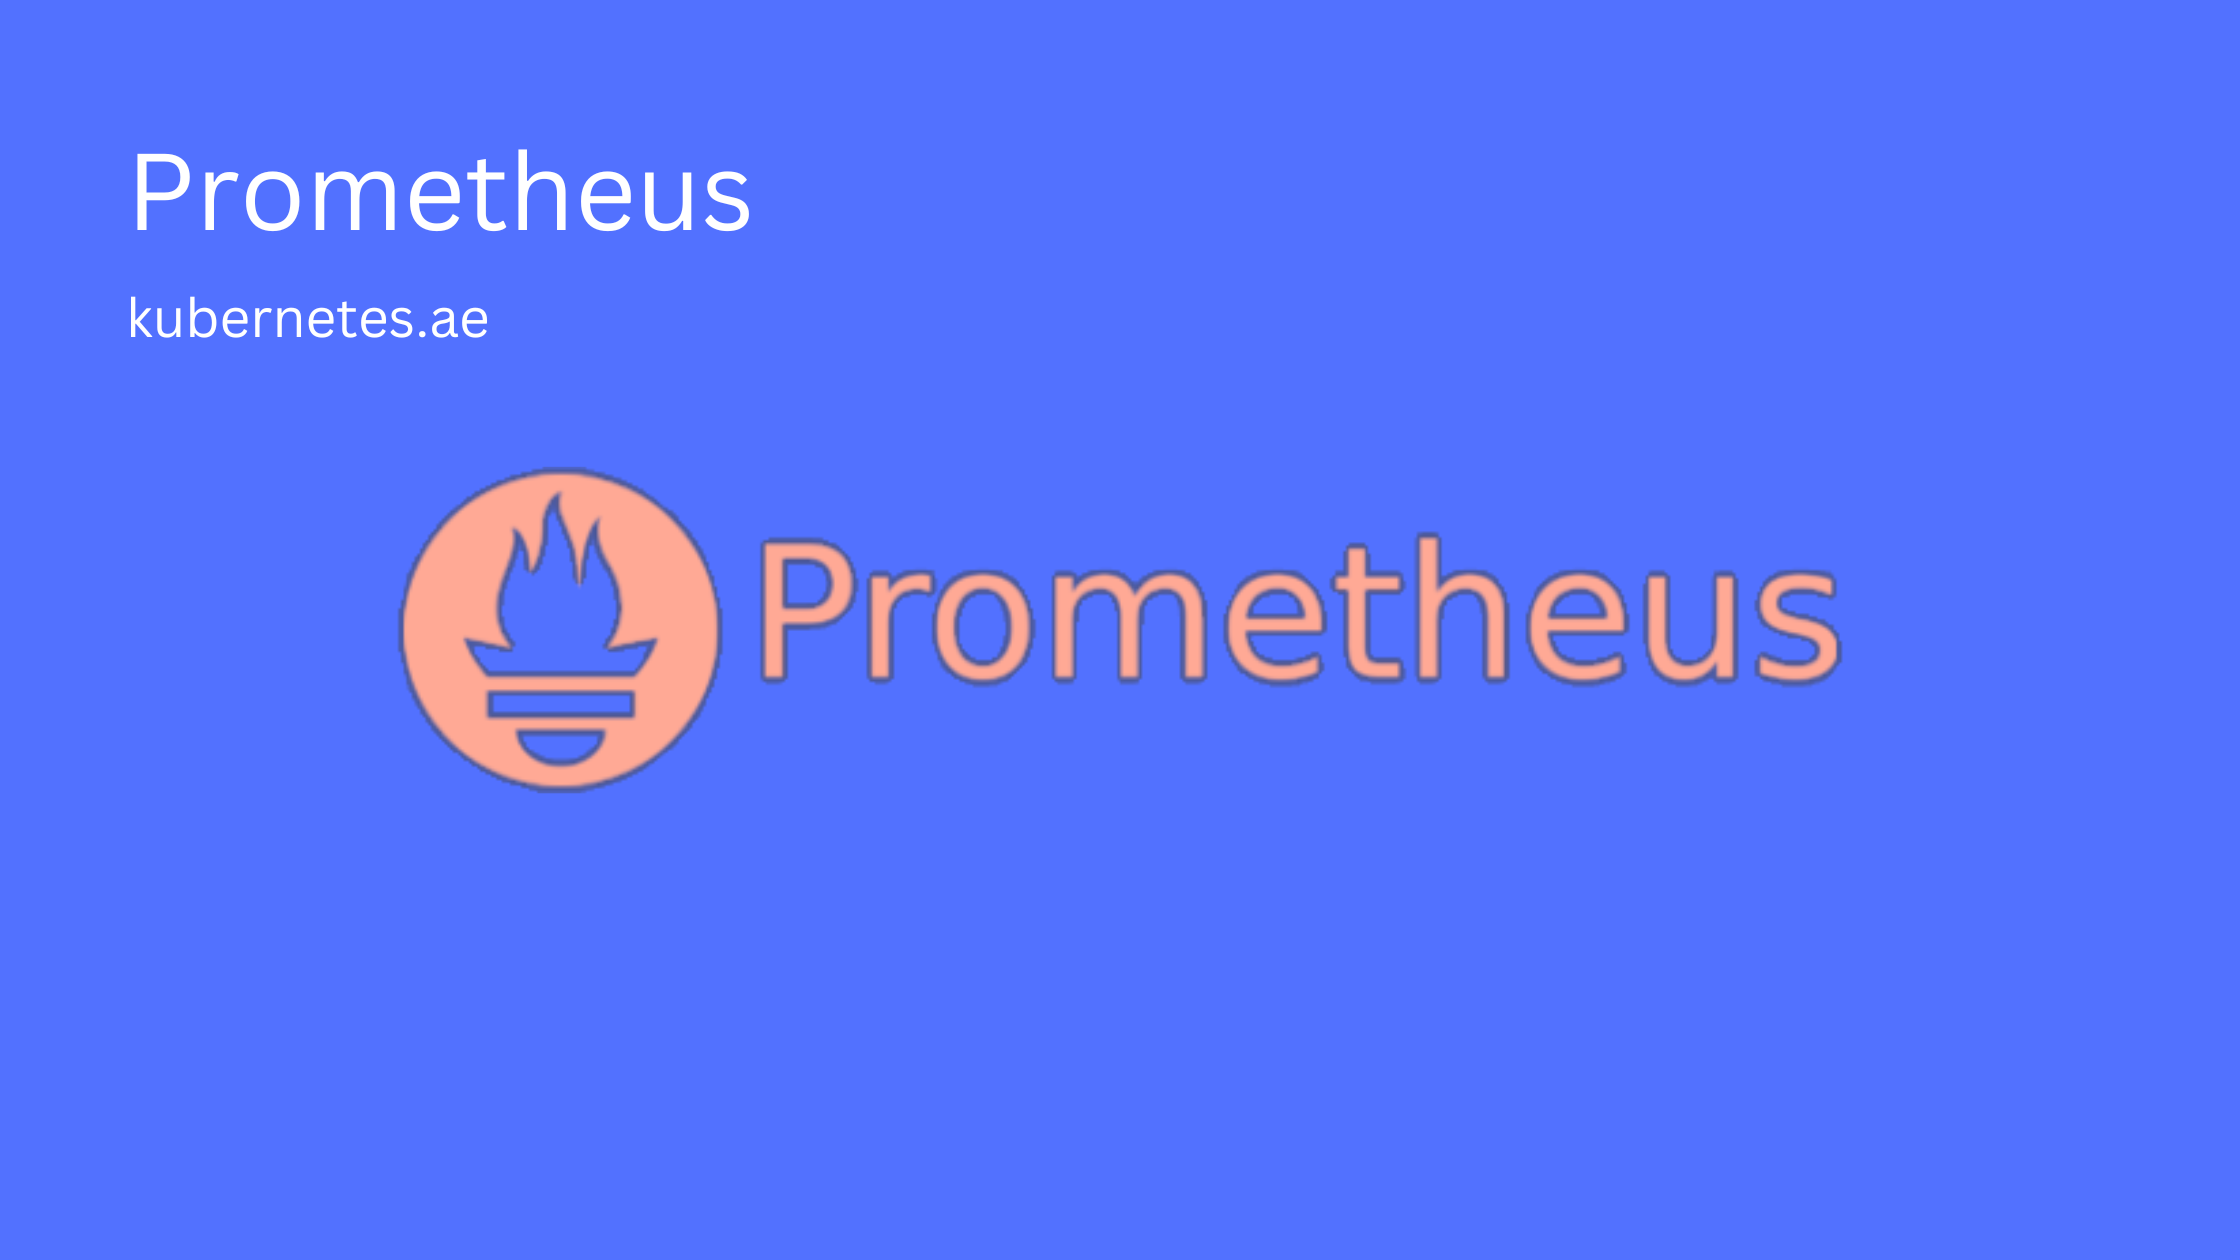 Prometheus configuration